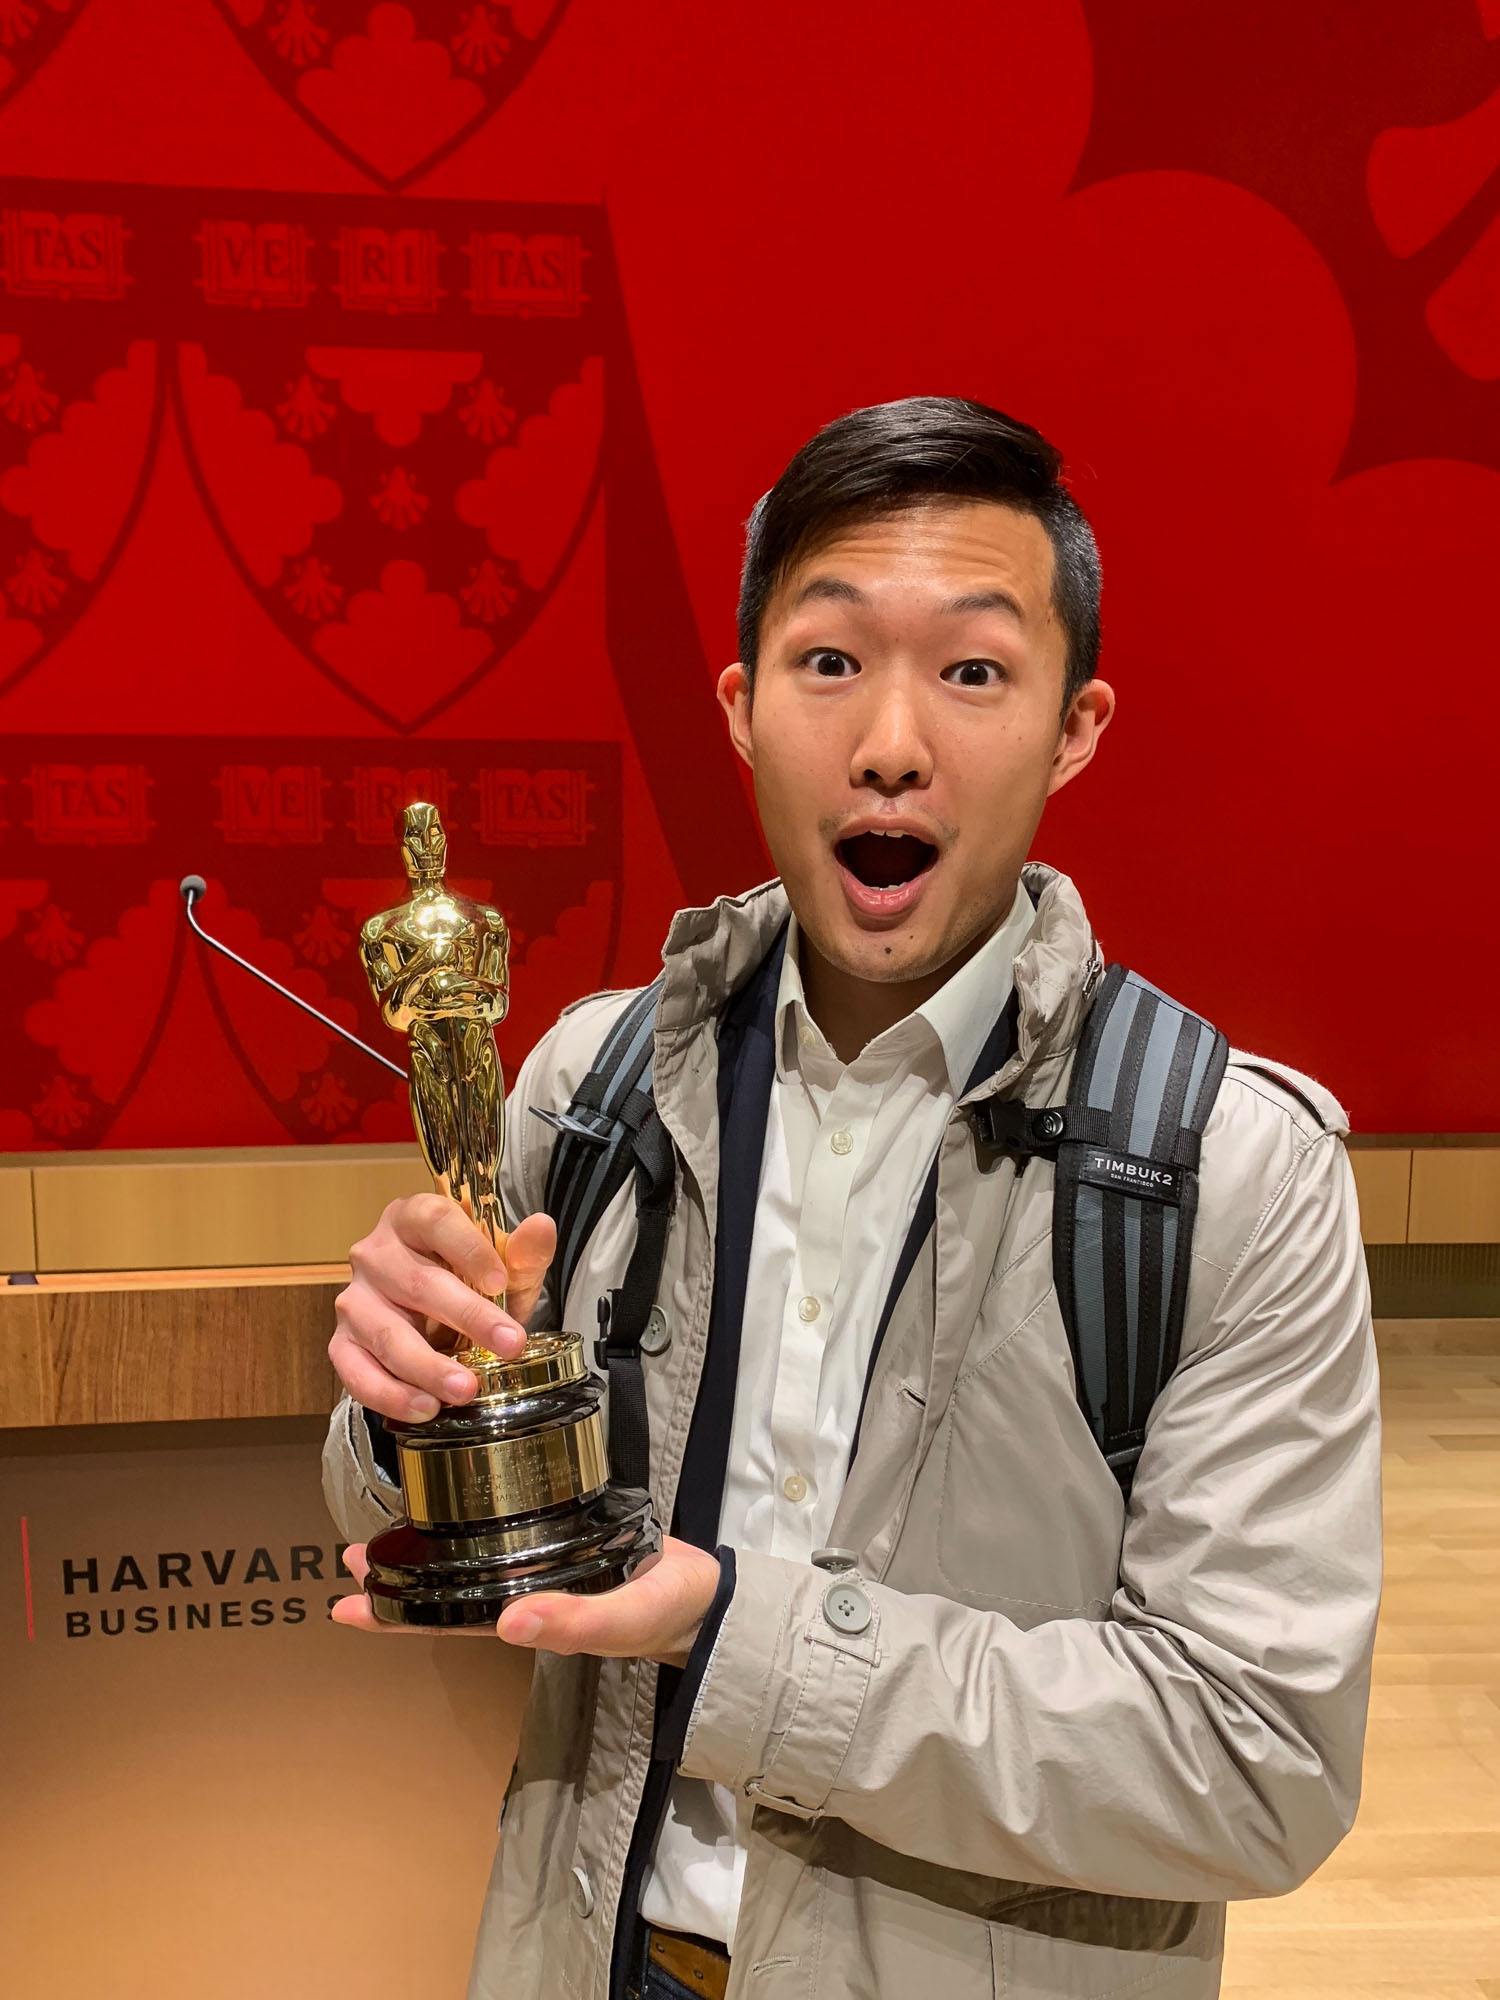 Earl Lee at Harvard Business School with Academy Award